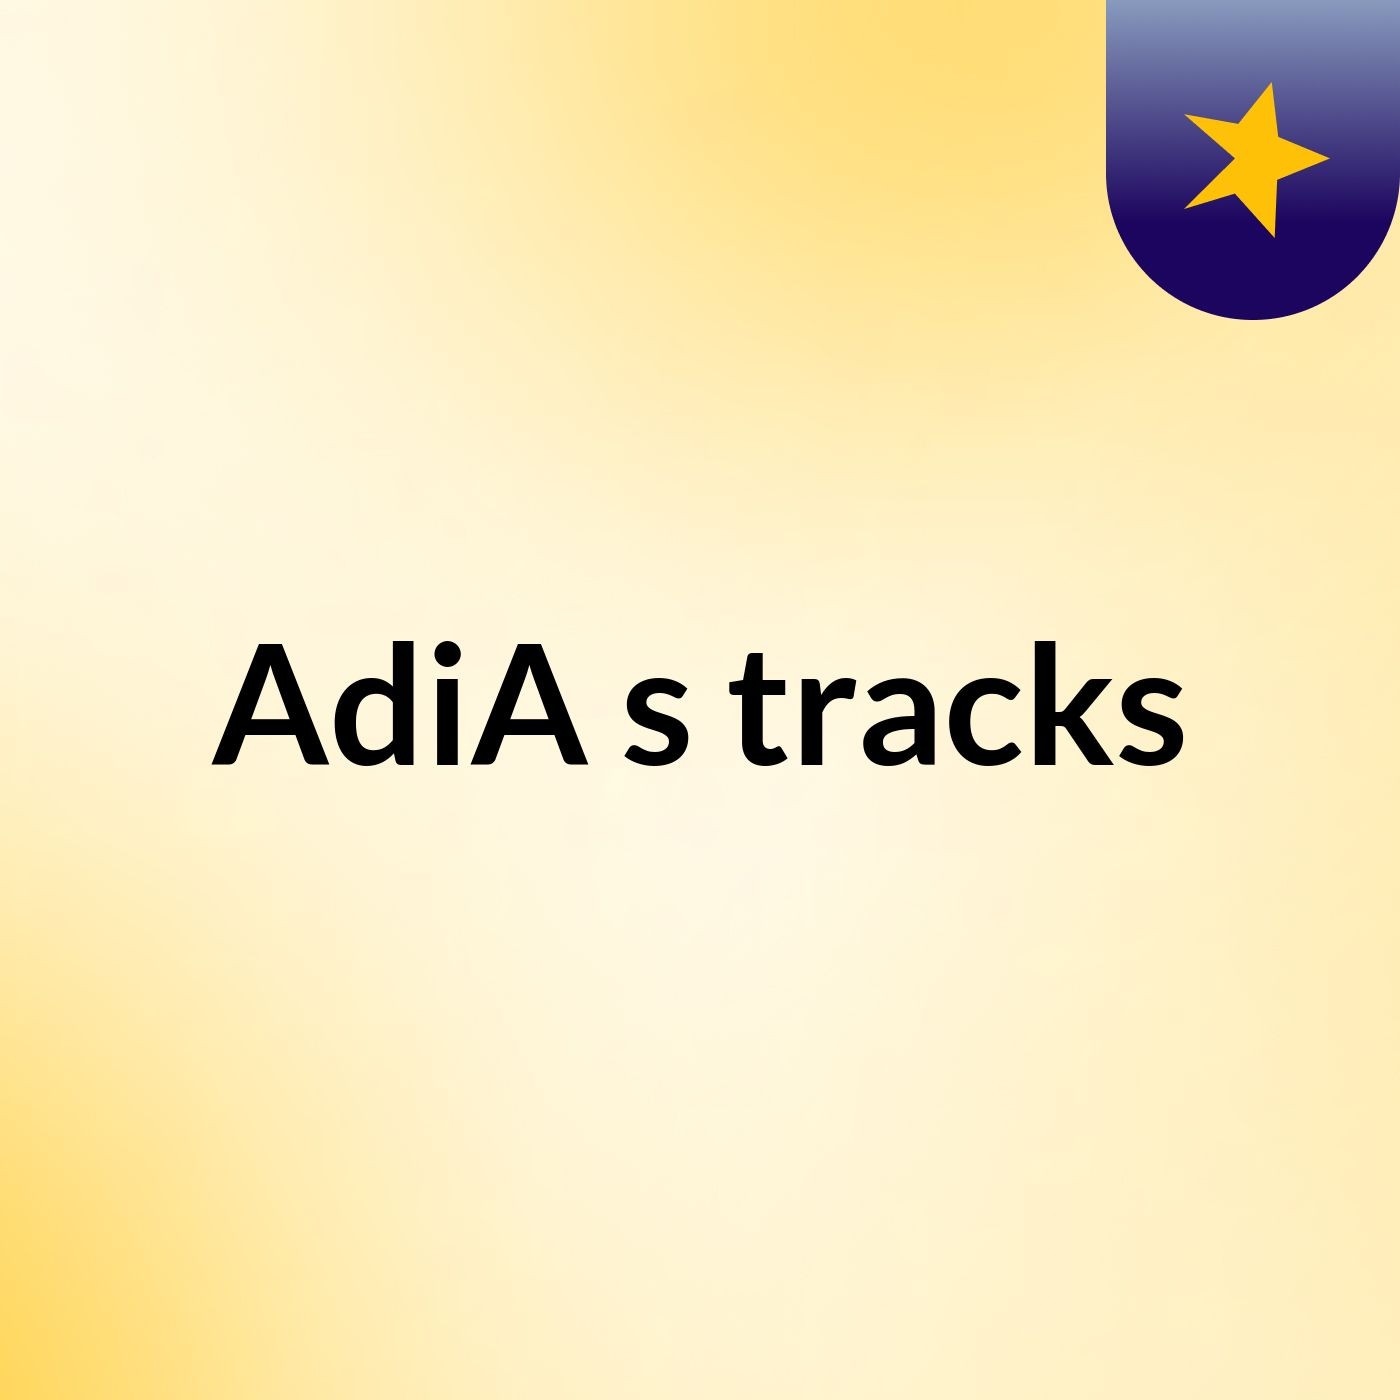 AdiA's tracks